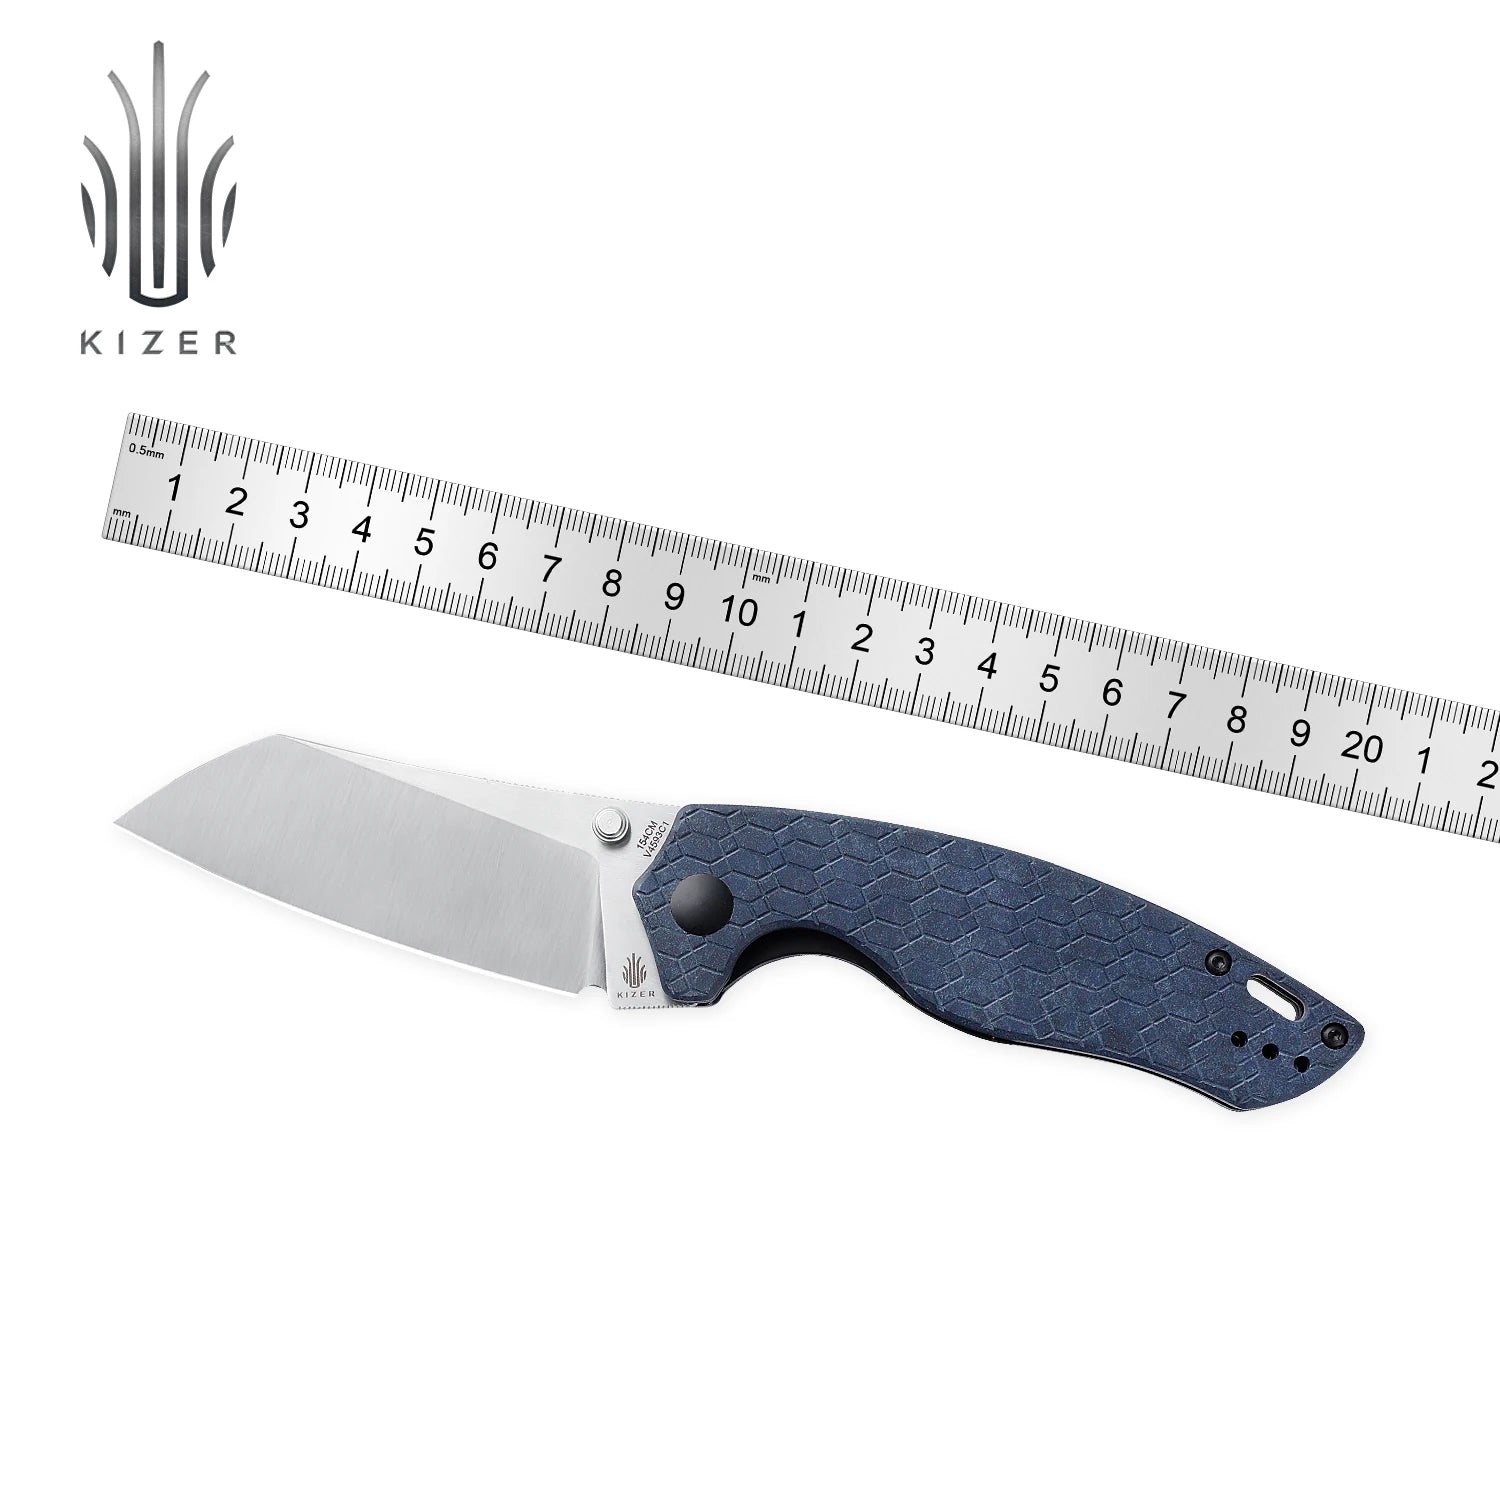 Kizer Folding Knife Towser K V4593C1 Camping Hunting Pocket Knife Blue Canyon Handle Outdoor Tool 2021 New 154CM Steel